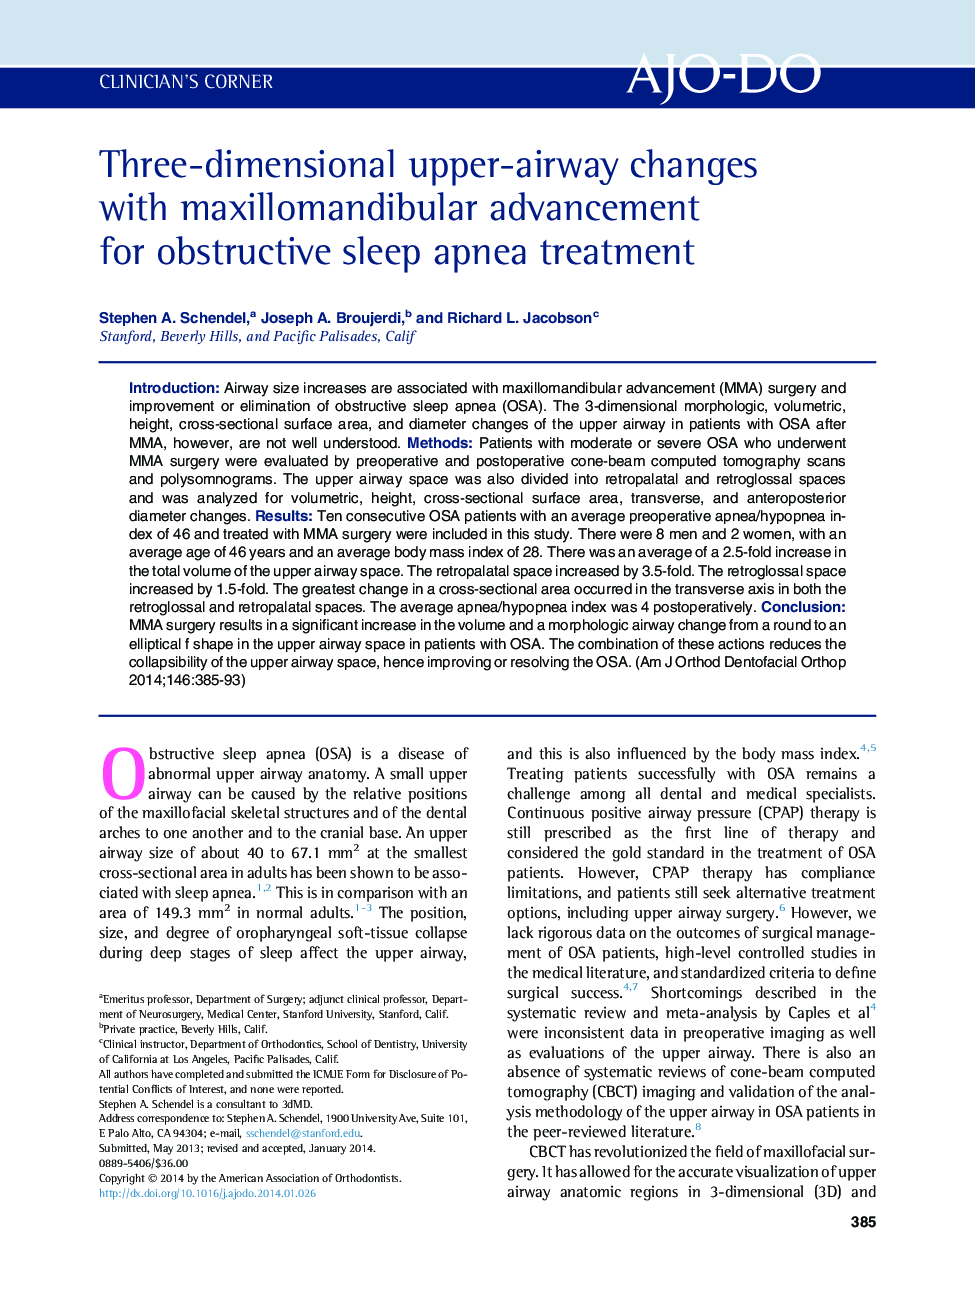 Three-dimensional upper-airway changes with maxillomandibular advancement for obstructive sleep apnea treatment 